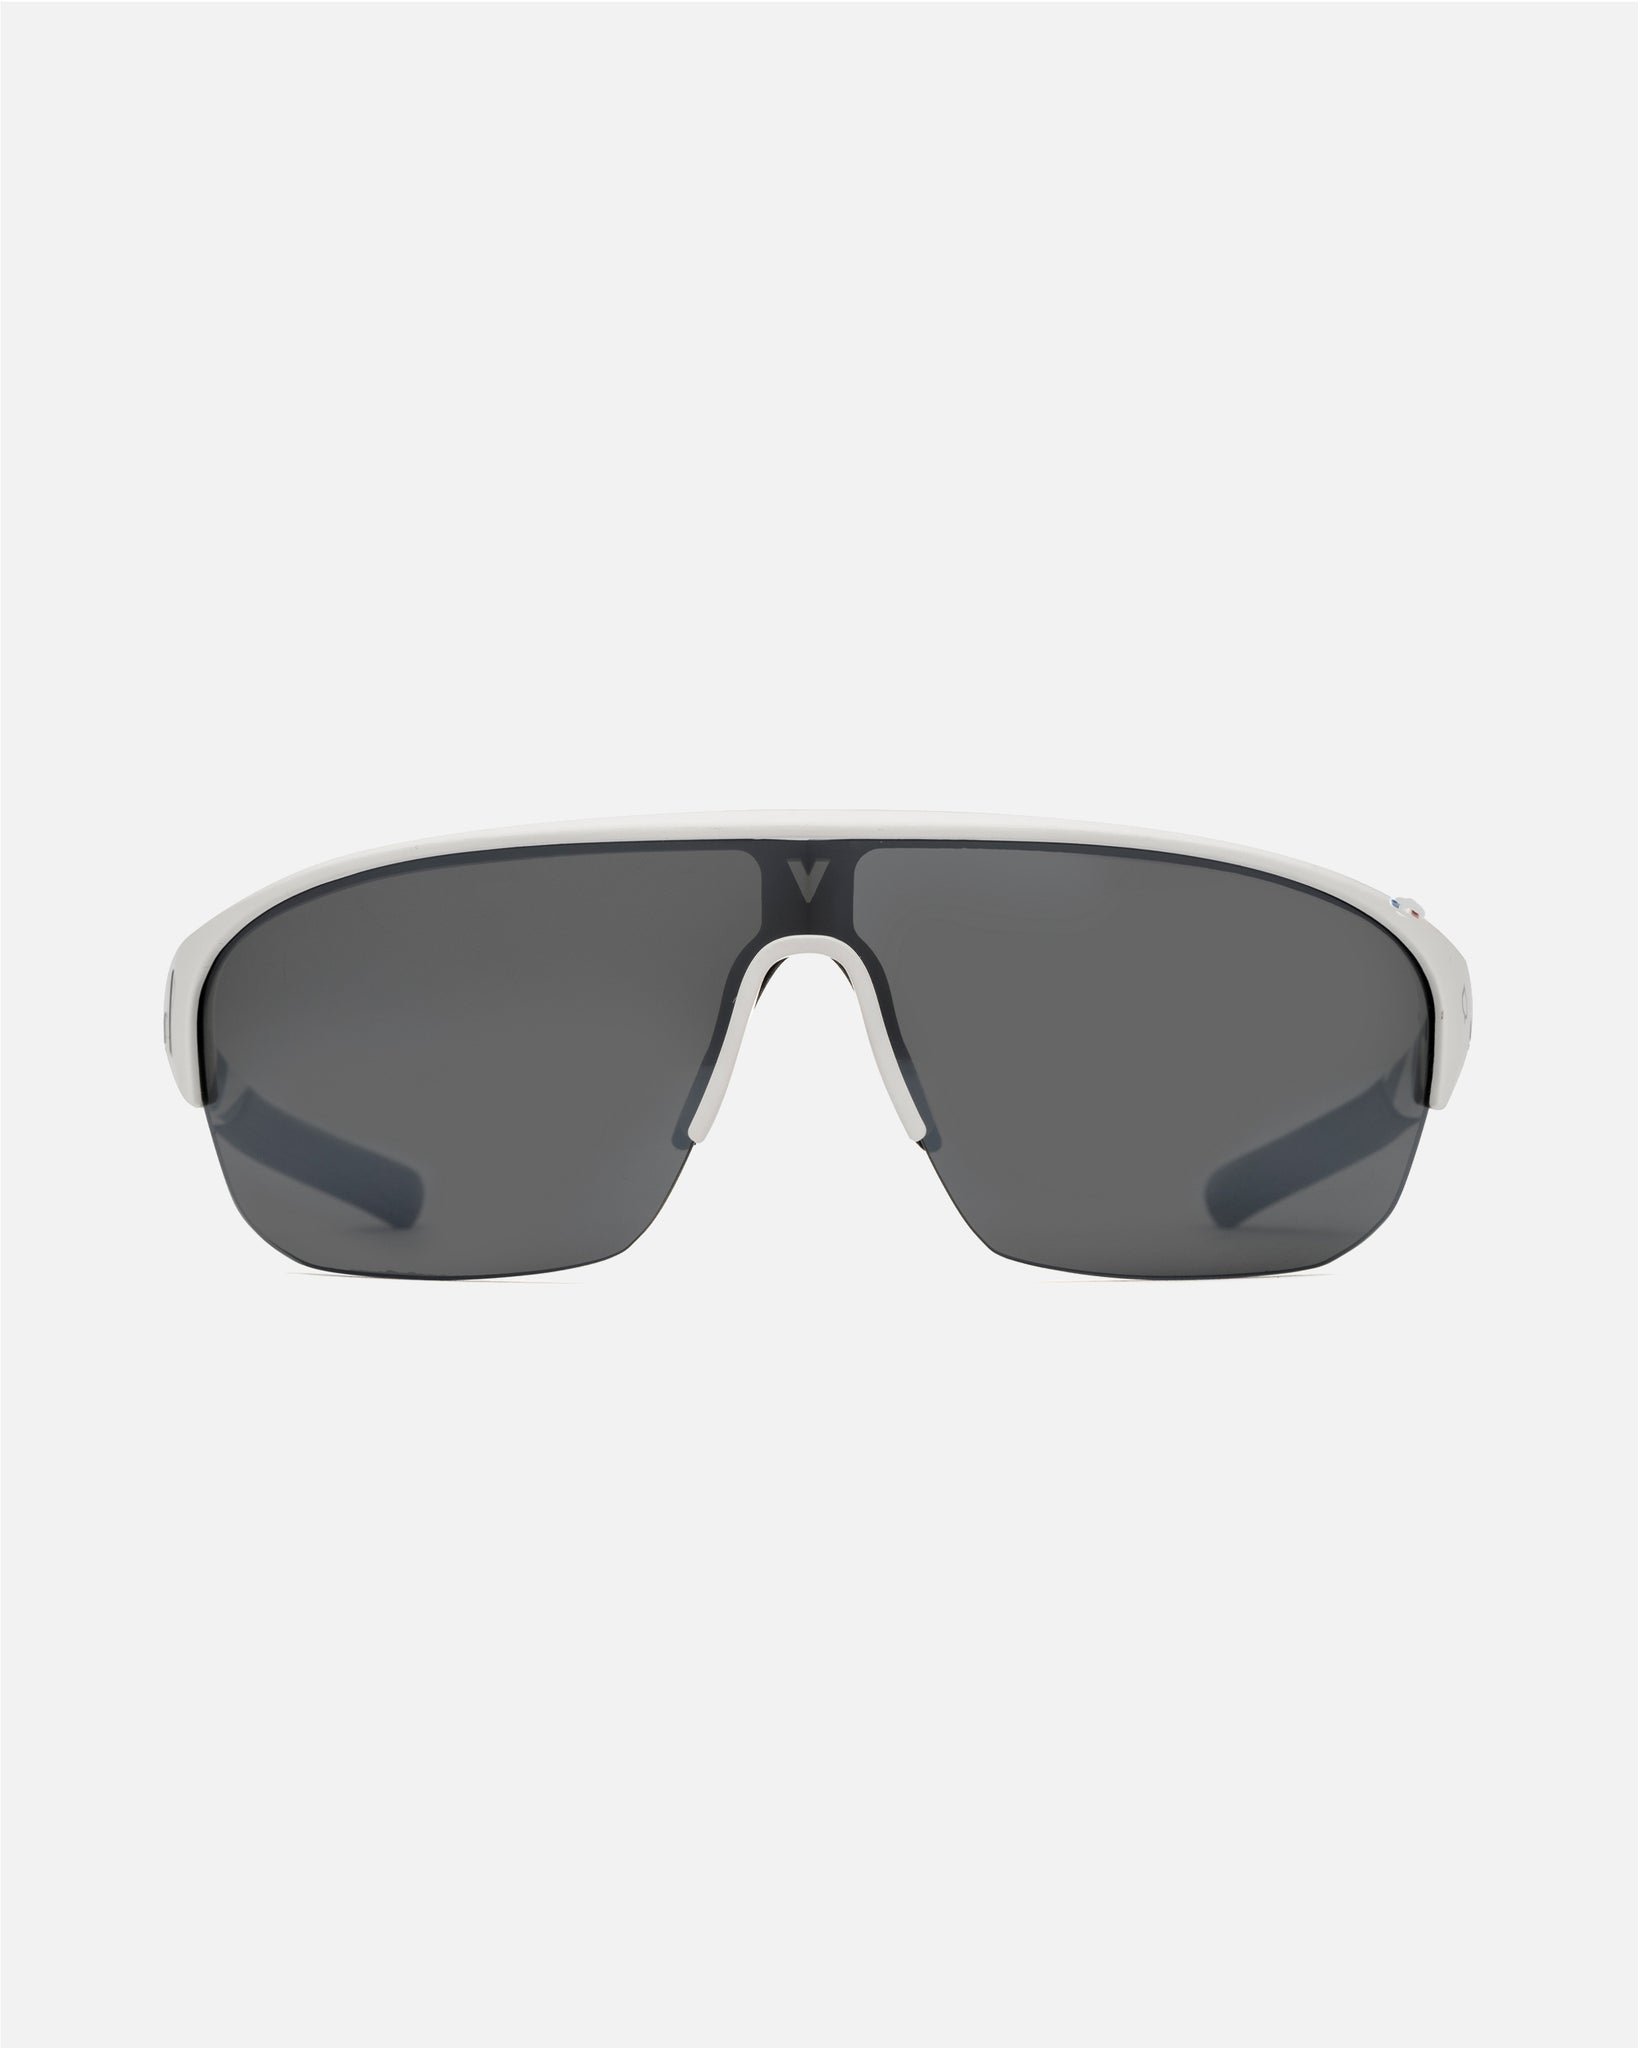 Vuarnet Storm Sunglasses -Mineral Glass Lenses - Flight Sunglasses